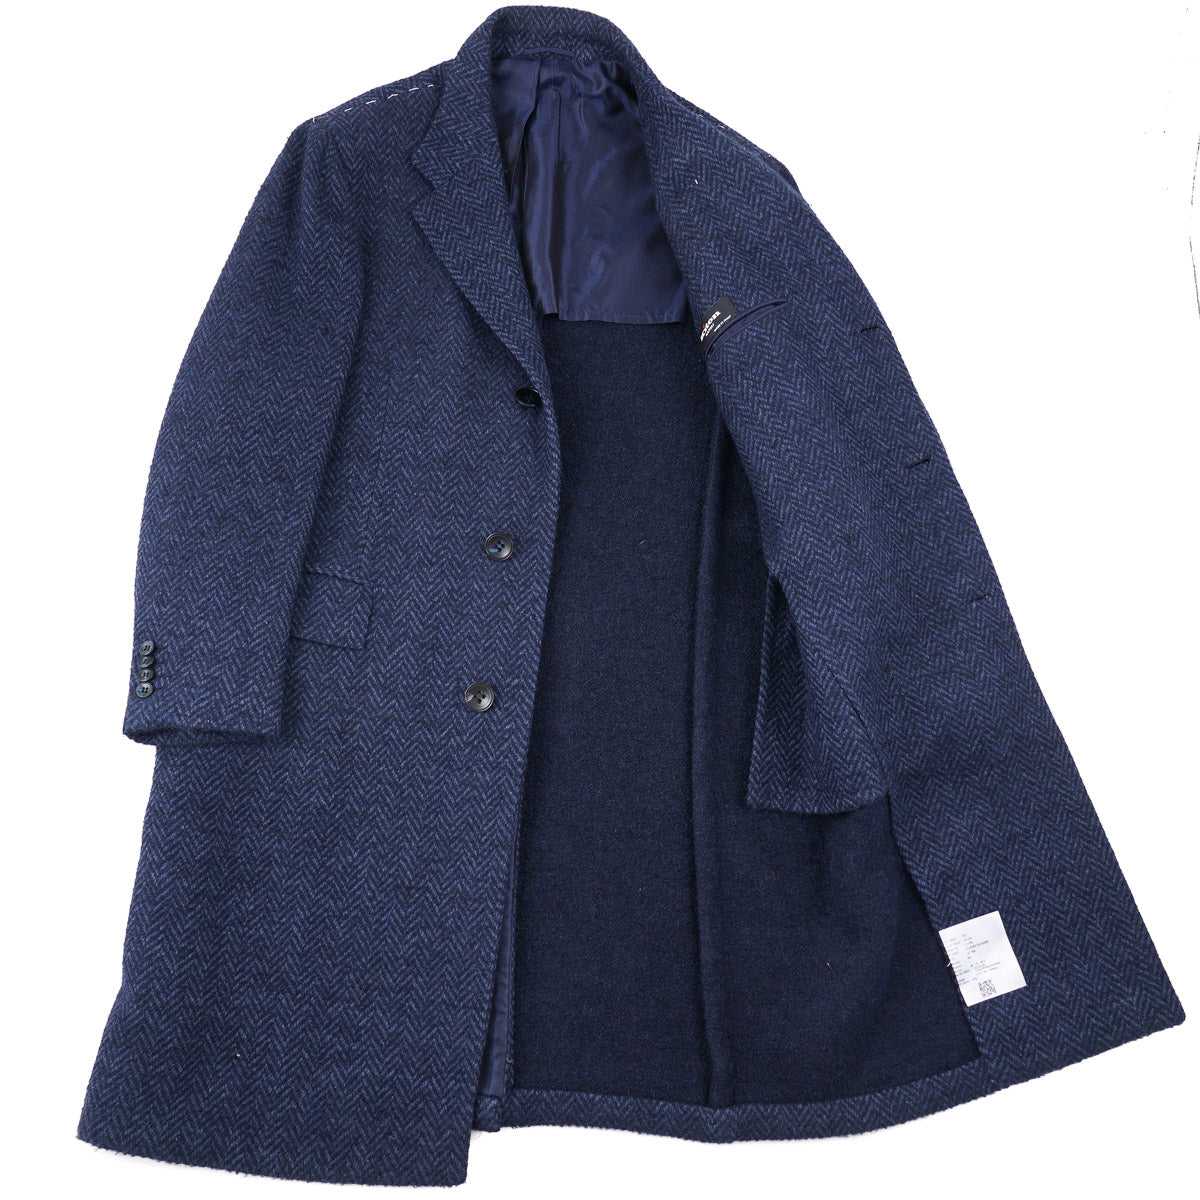 Kiton Alpaca and Cashmere Overcoat - Top Shelf Apparel